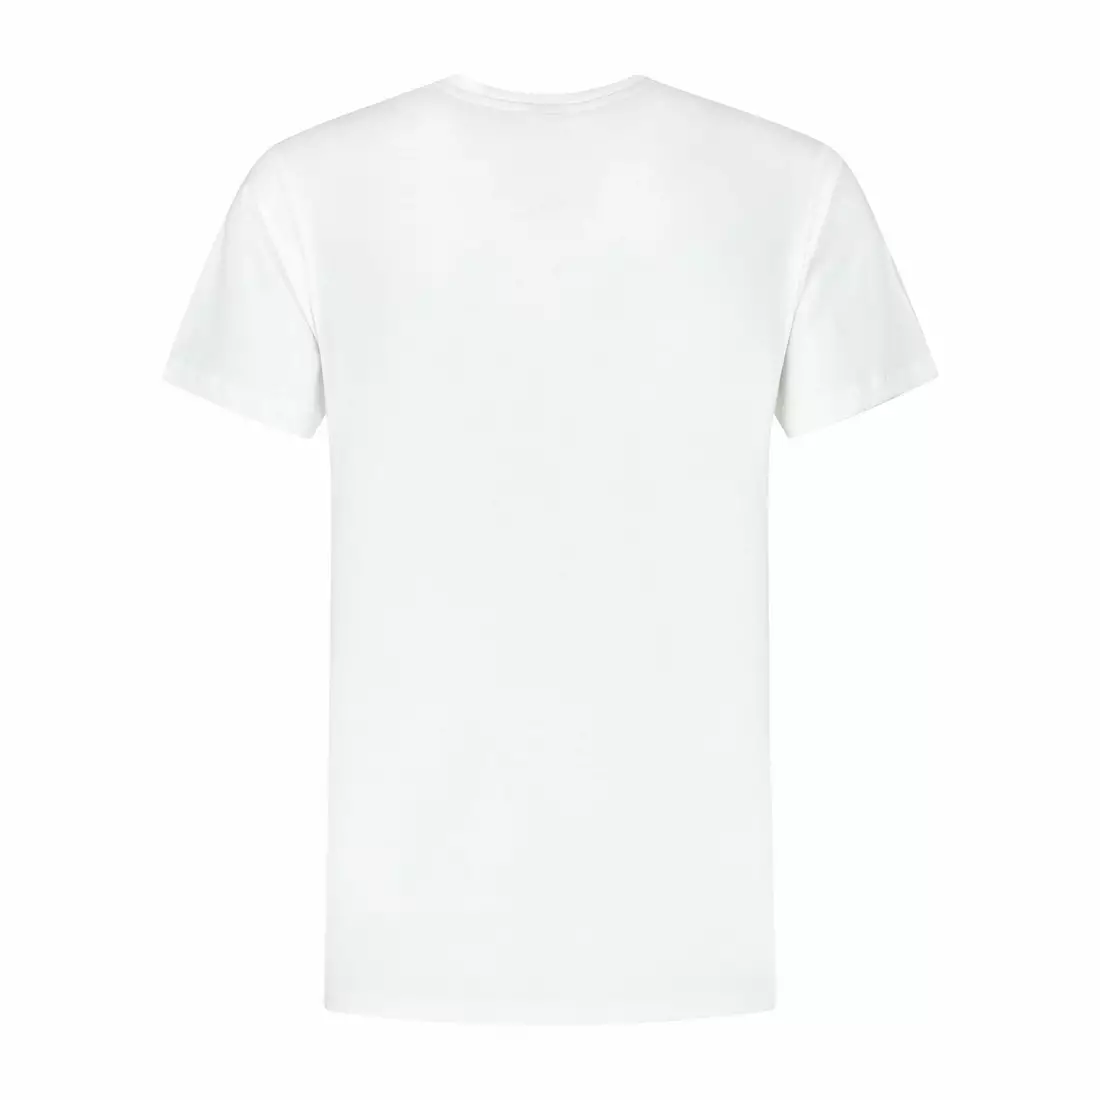 Rogelli men's T-shirt LOGO white